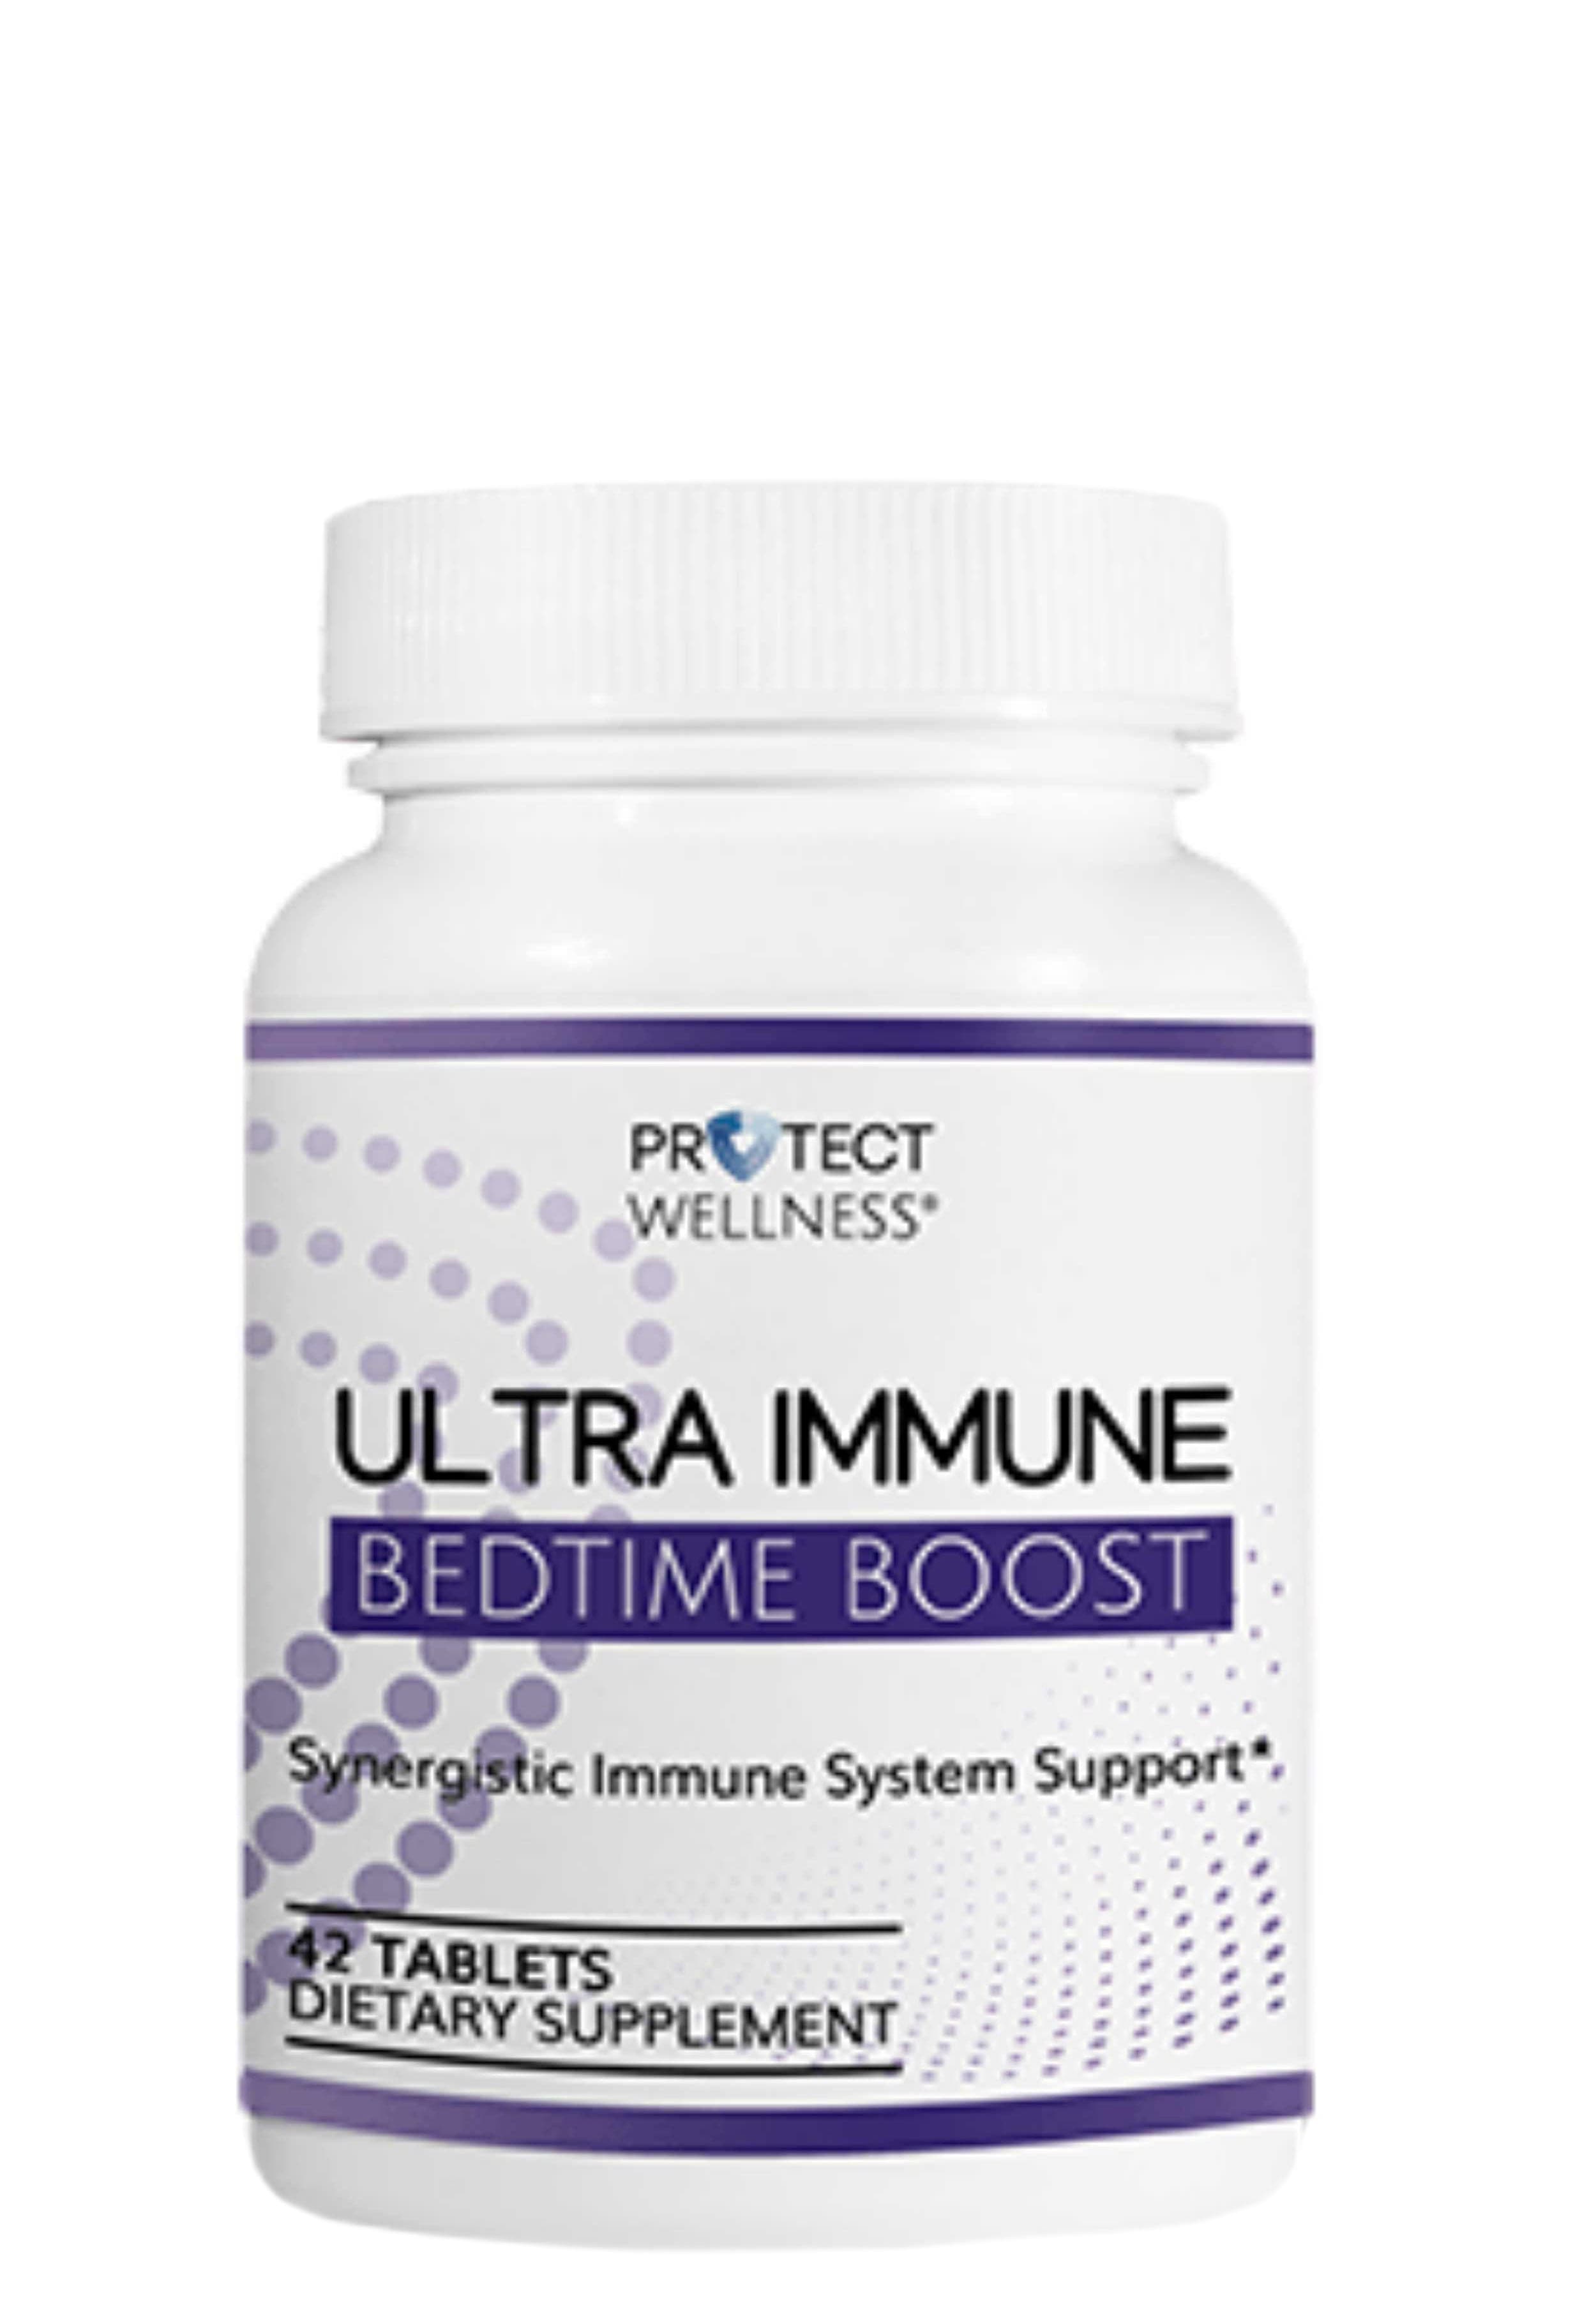 Protect Wellness Ultra Immune Bedtime Boost